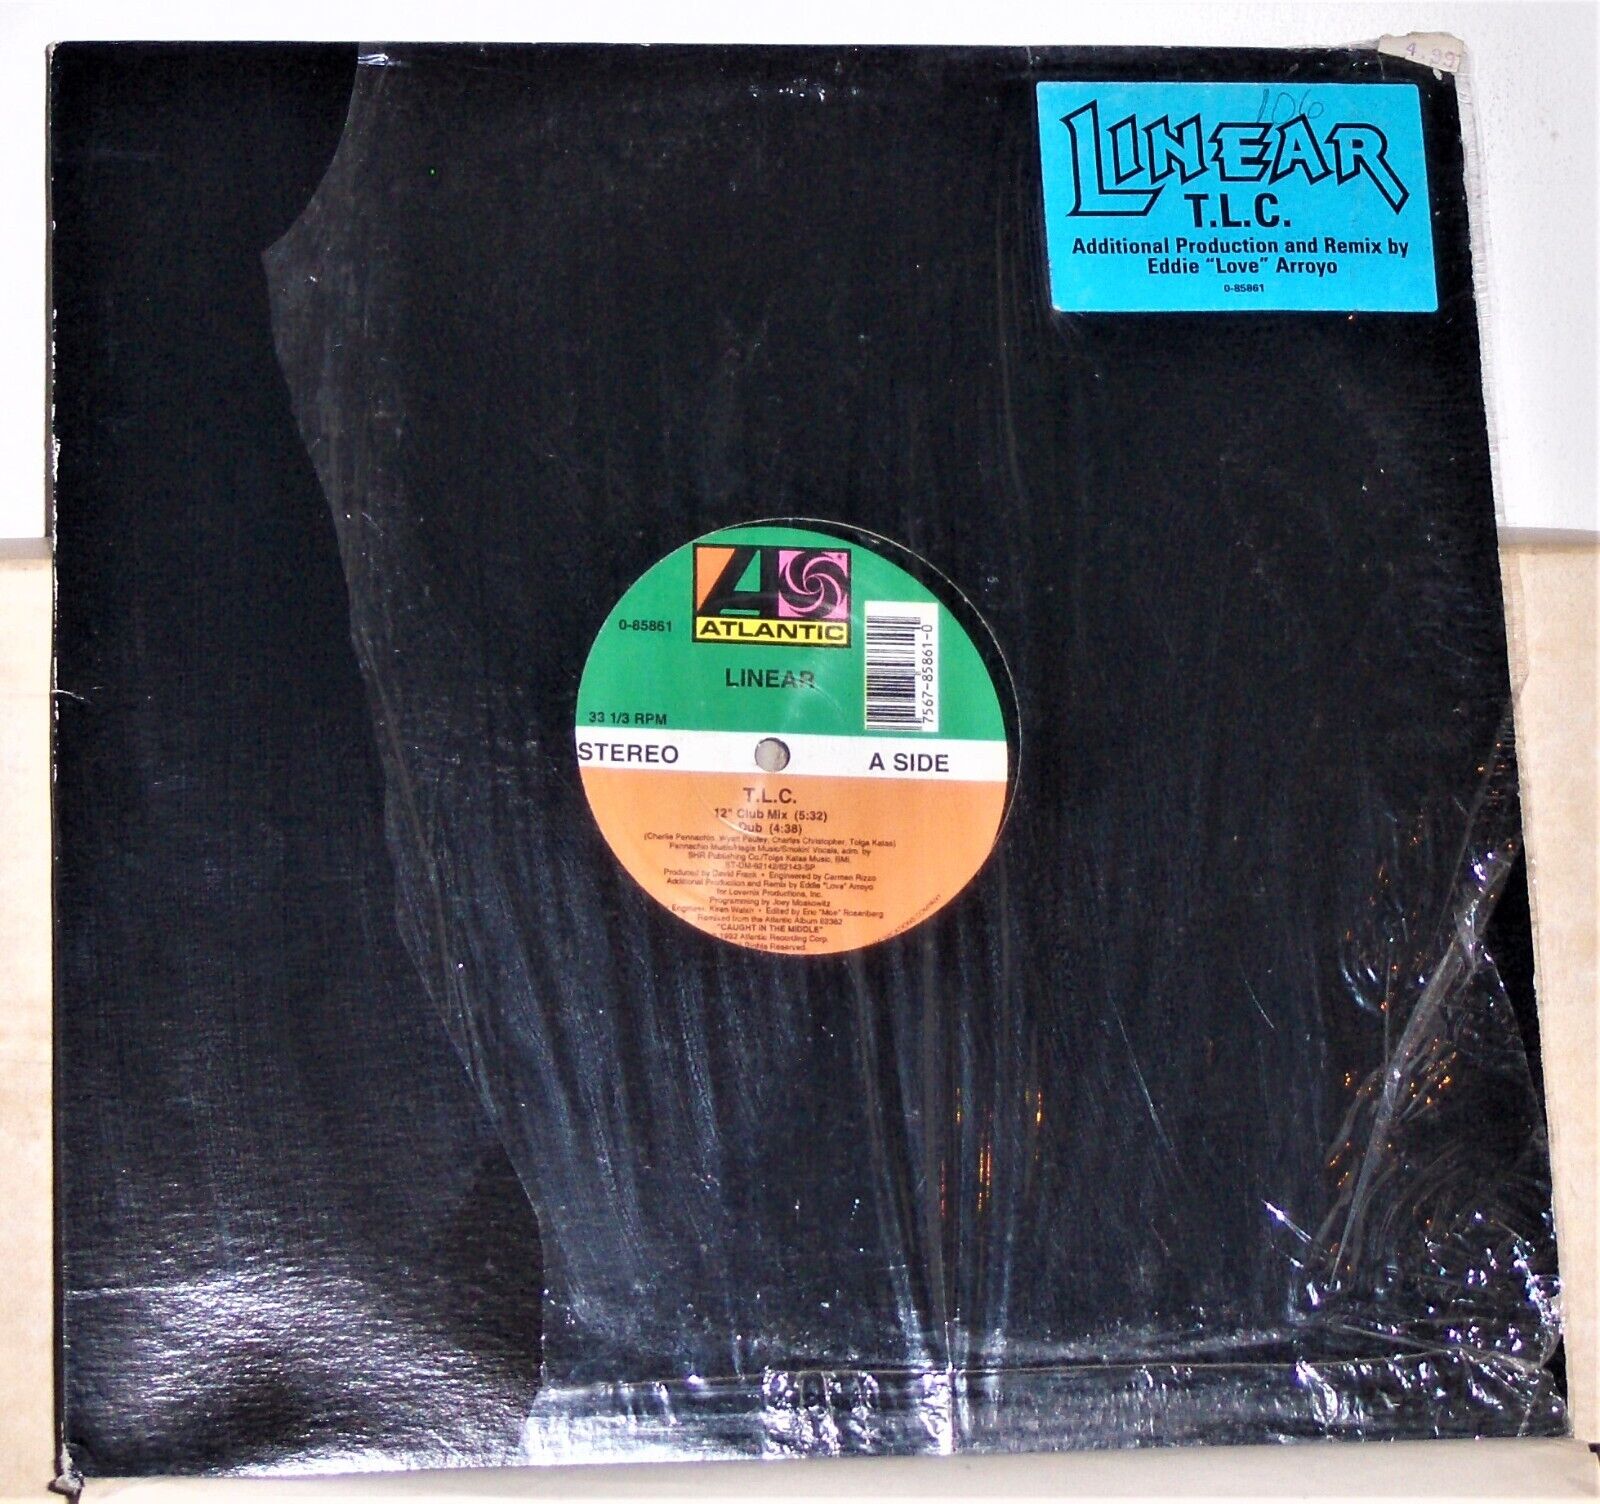 Linear – T.L.C. - 12 inch Single Vinyl Record